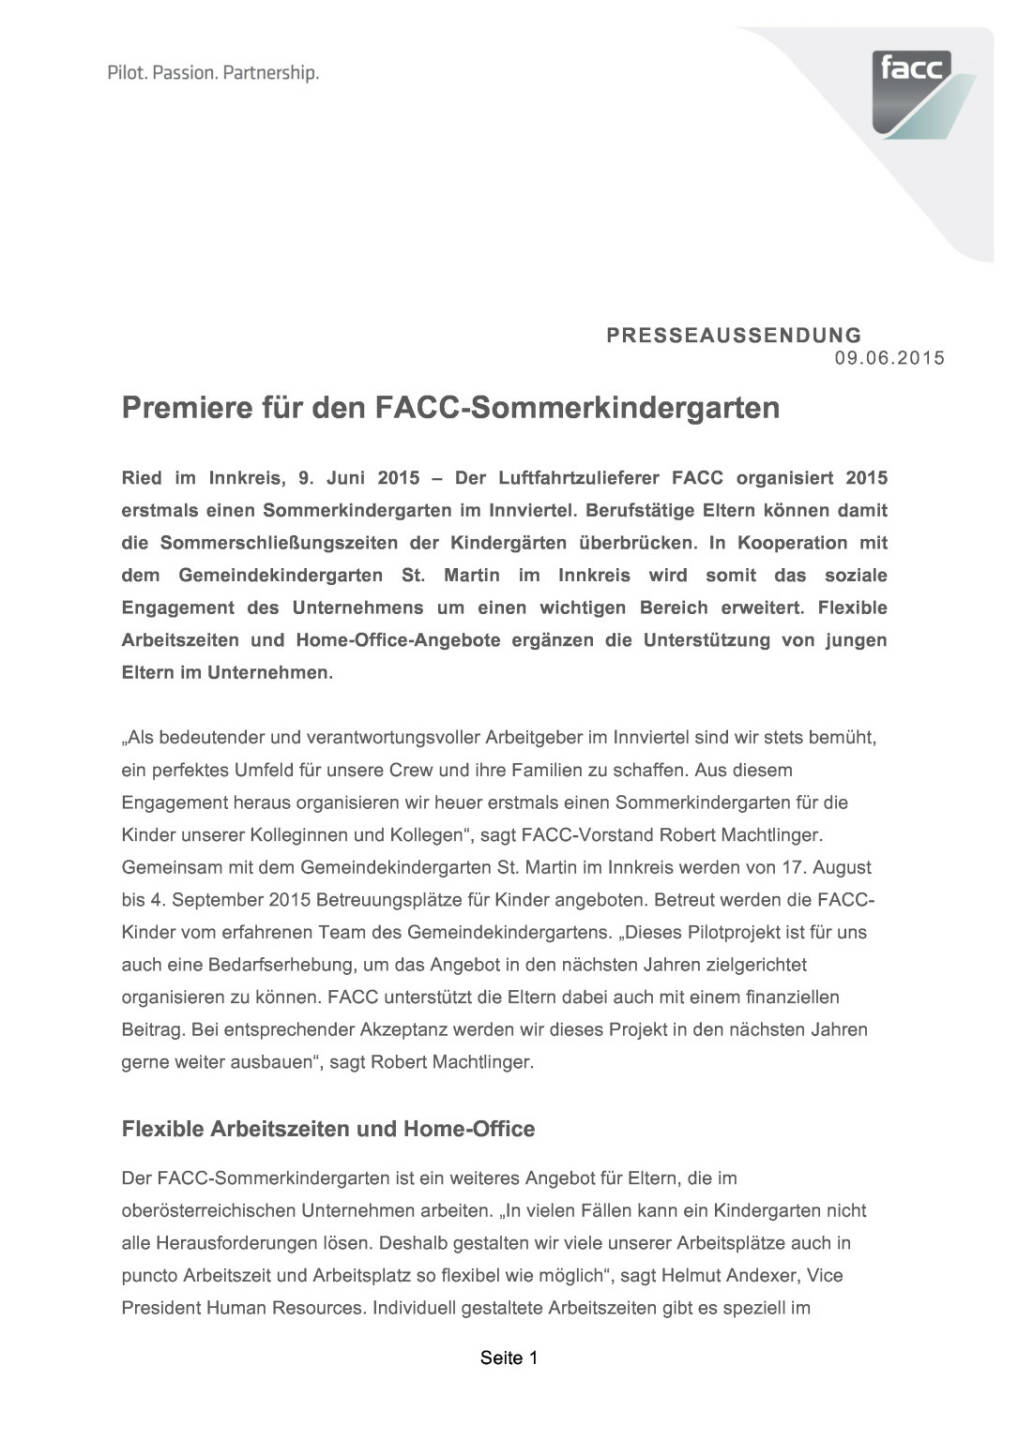 Premiere für den FACC-Sommerkindergarten , Seite 1/3, komplettes Dokument unter http://boerse-social.com/static/uploads/file_105_facc_kinder.pdf